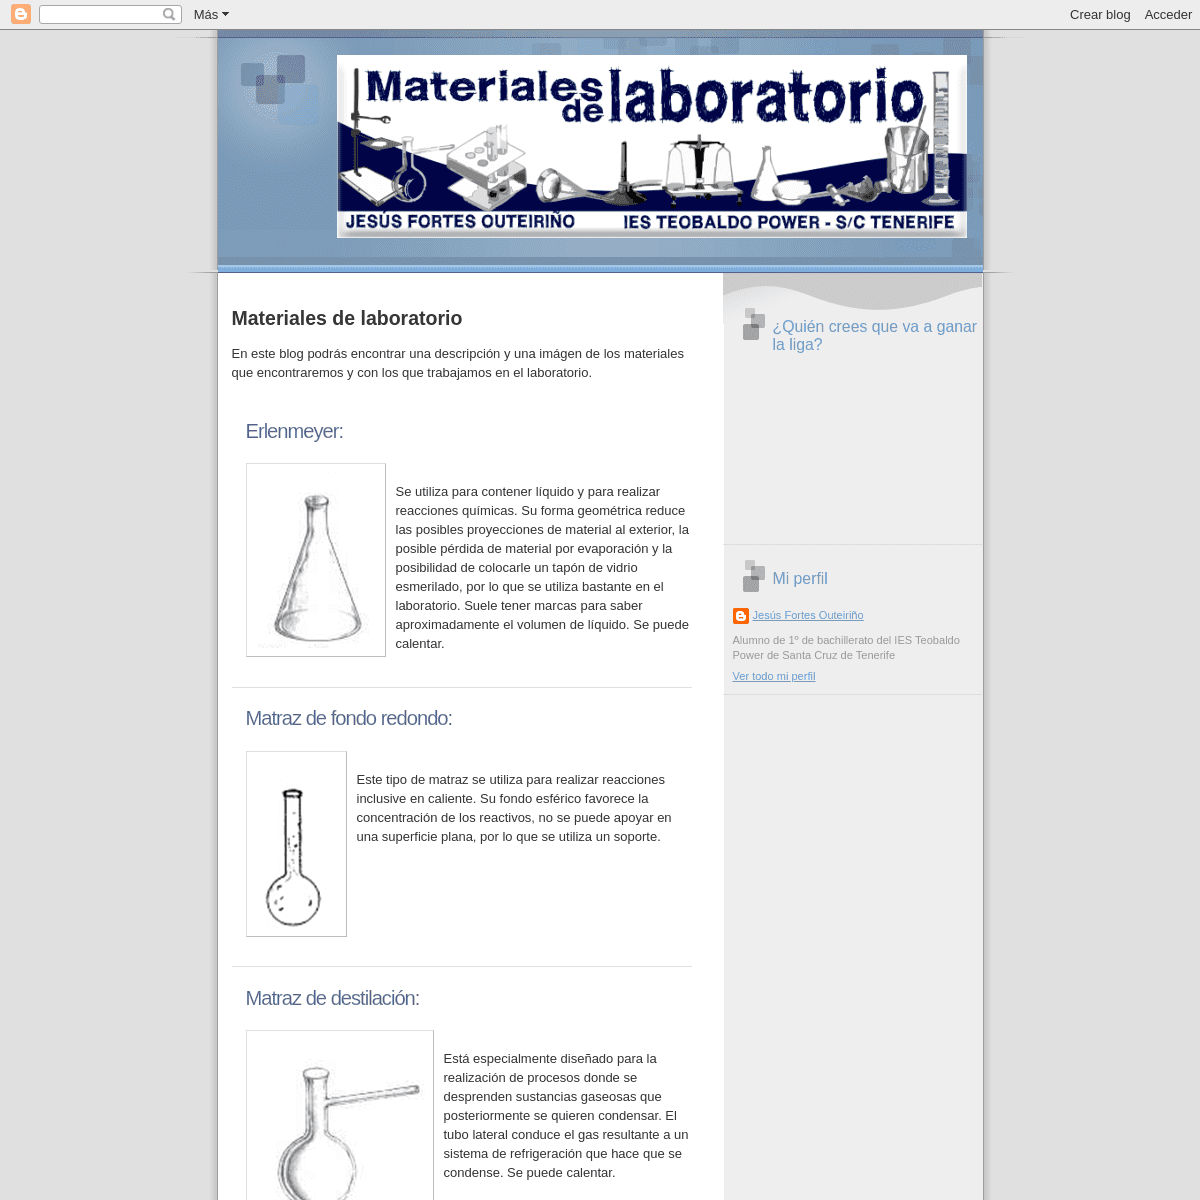 A complete backup of materialeslaboratorio.blogspot.com